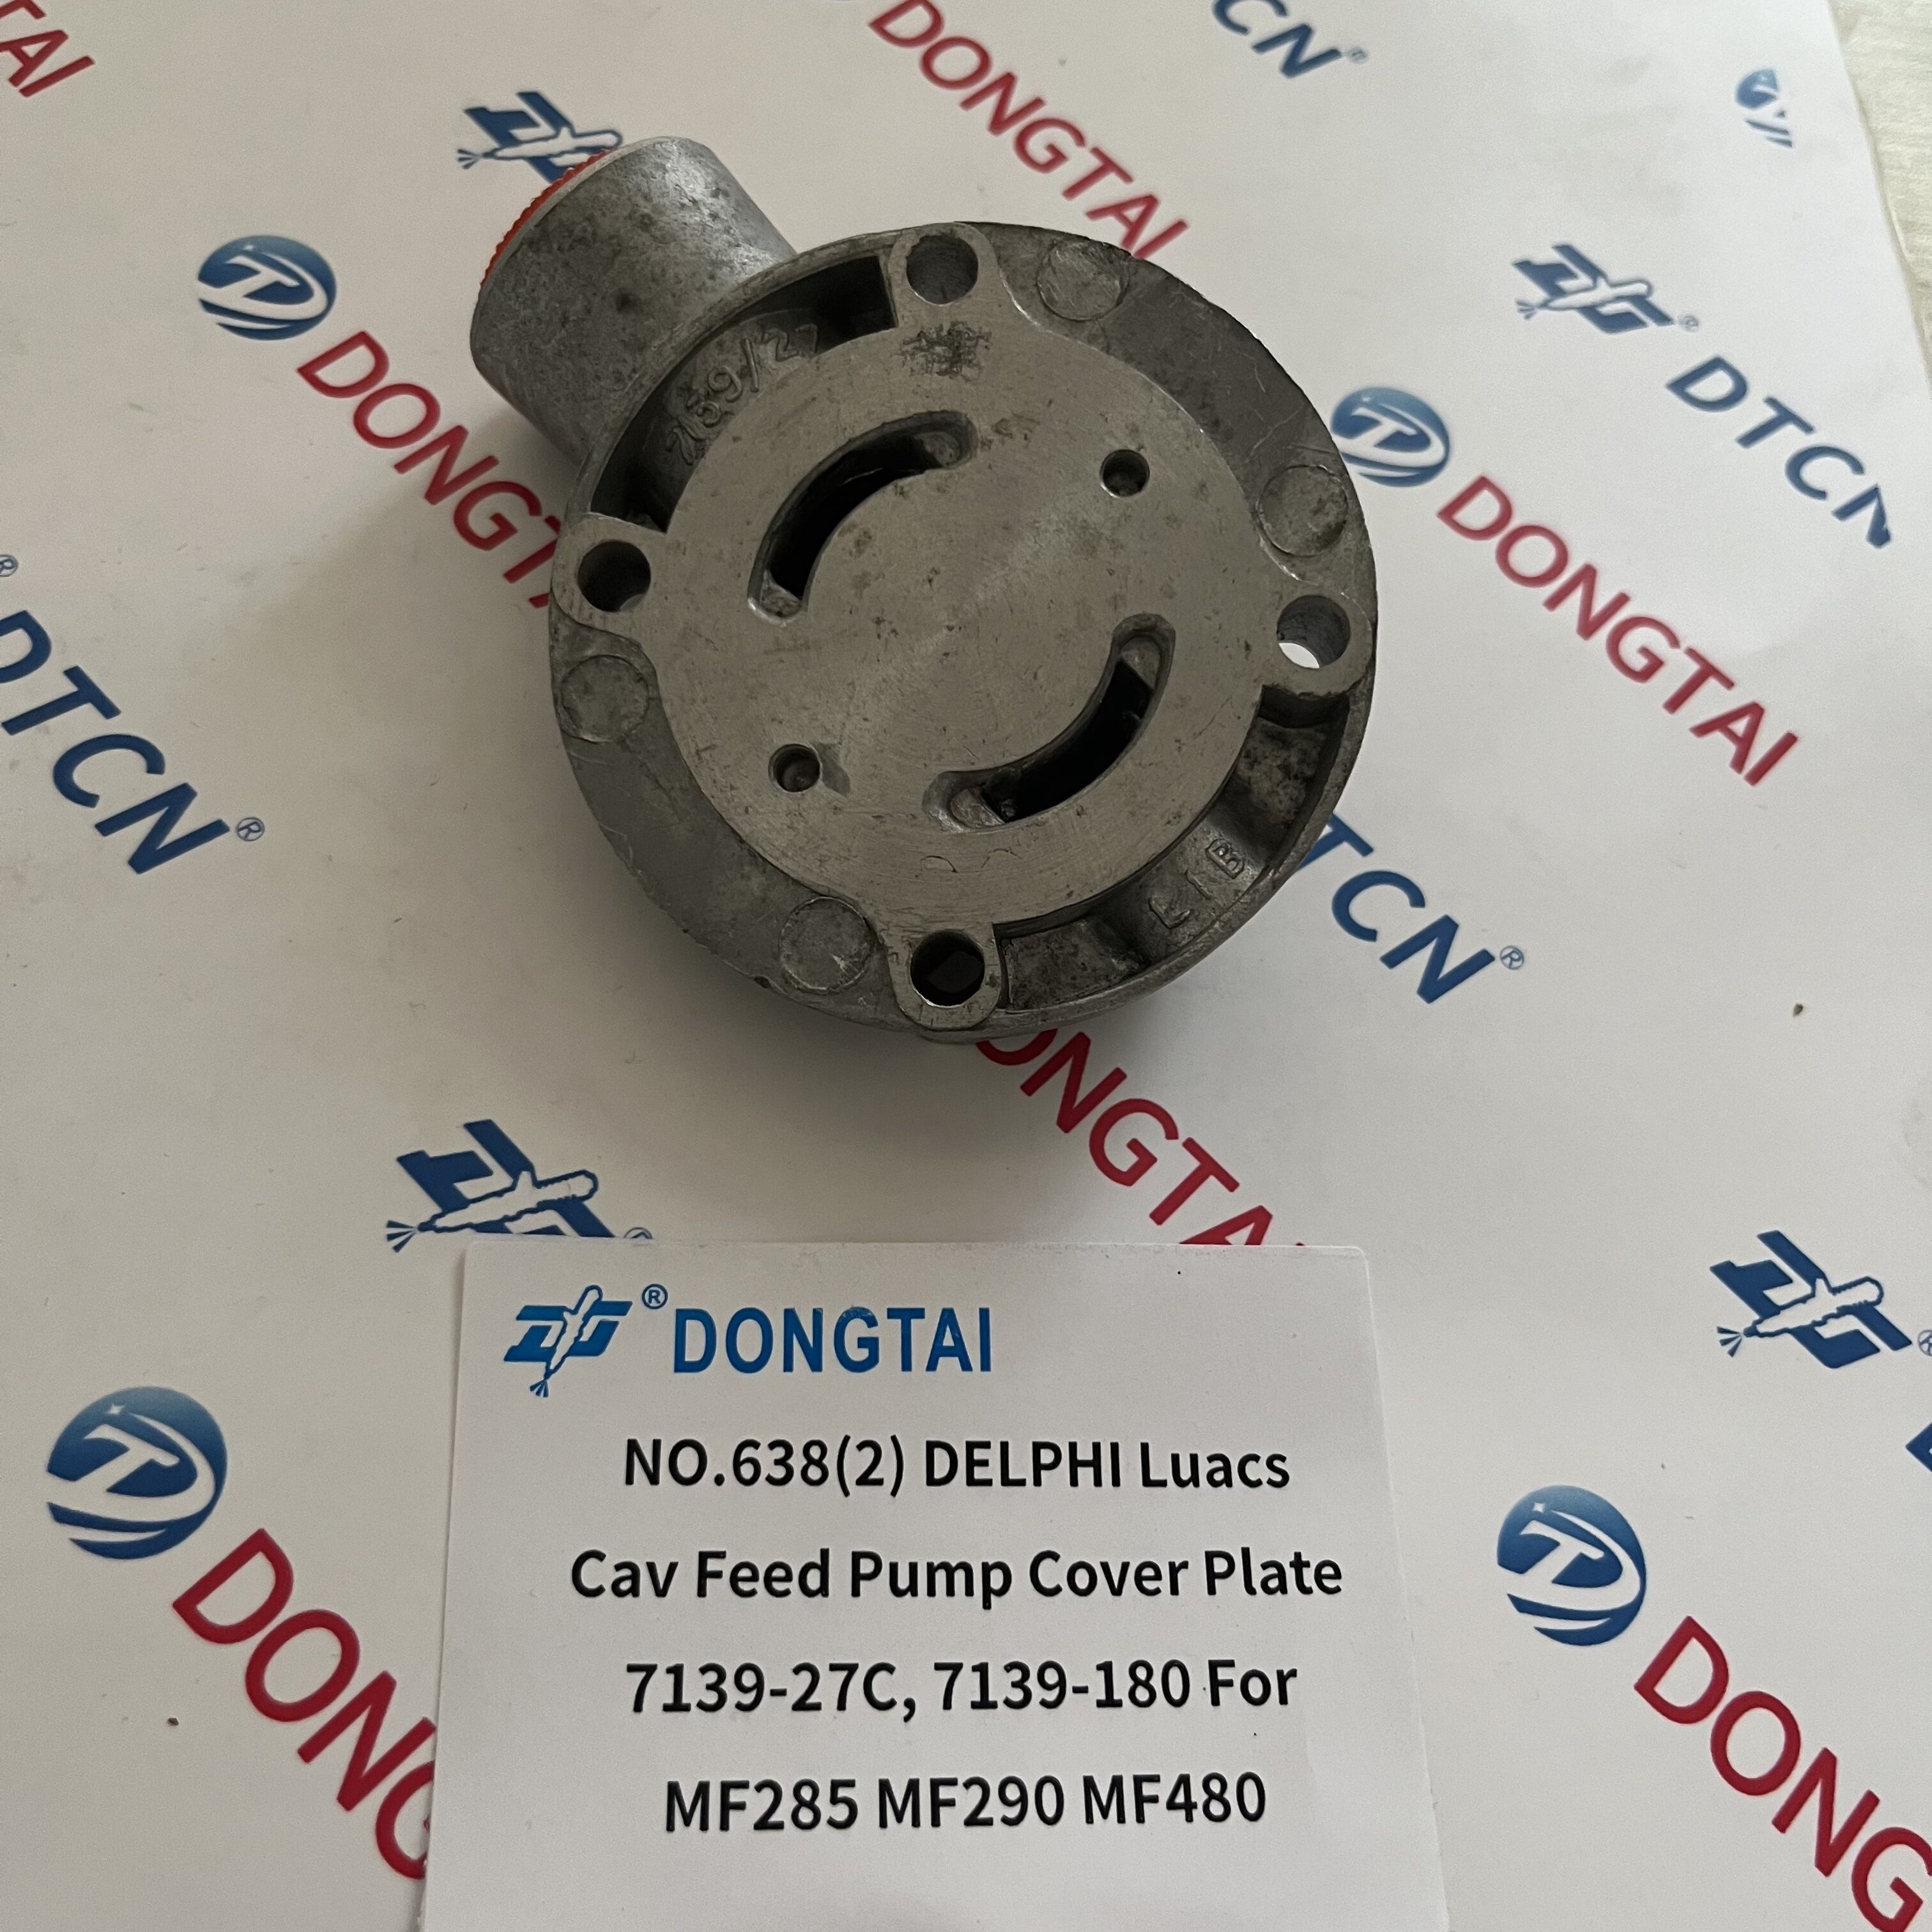 NO.638(2) DELPHI Luacs Cav Feed Pump Cover Plate 7139-27C, 7135-180 For MF285 MF290 MF480